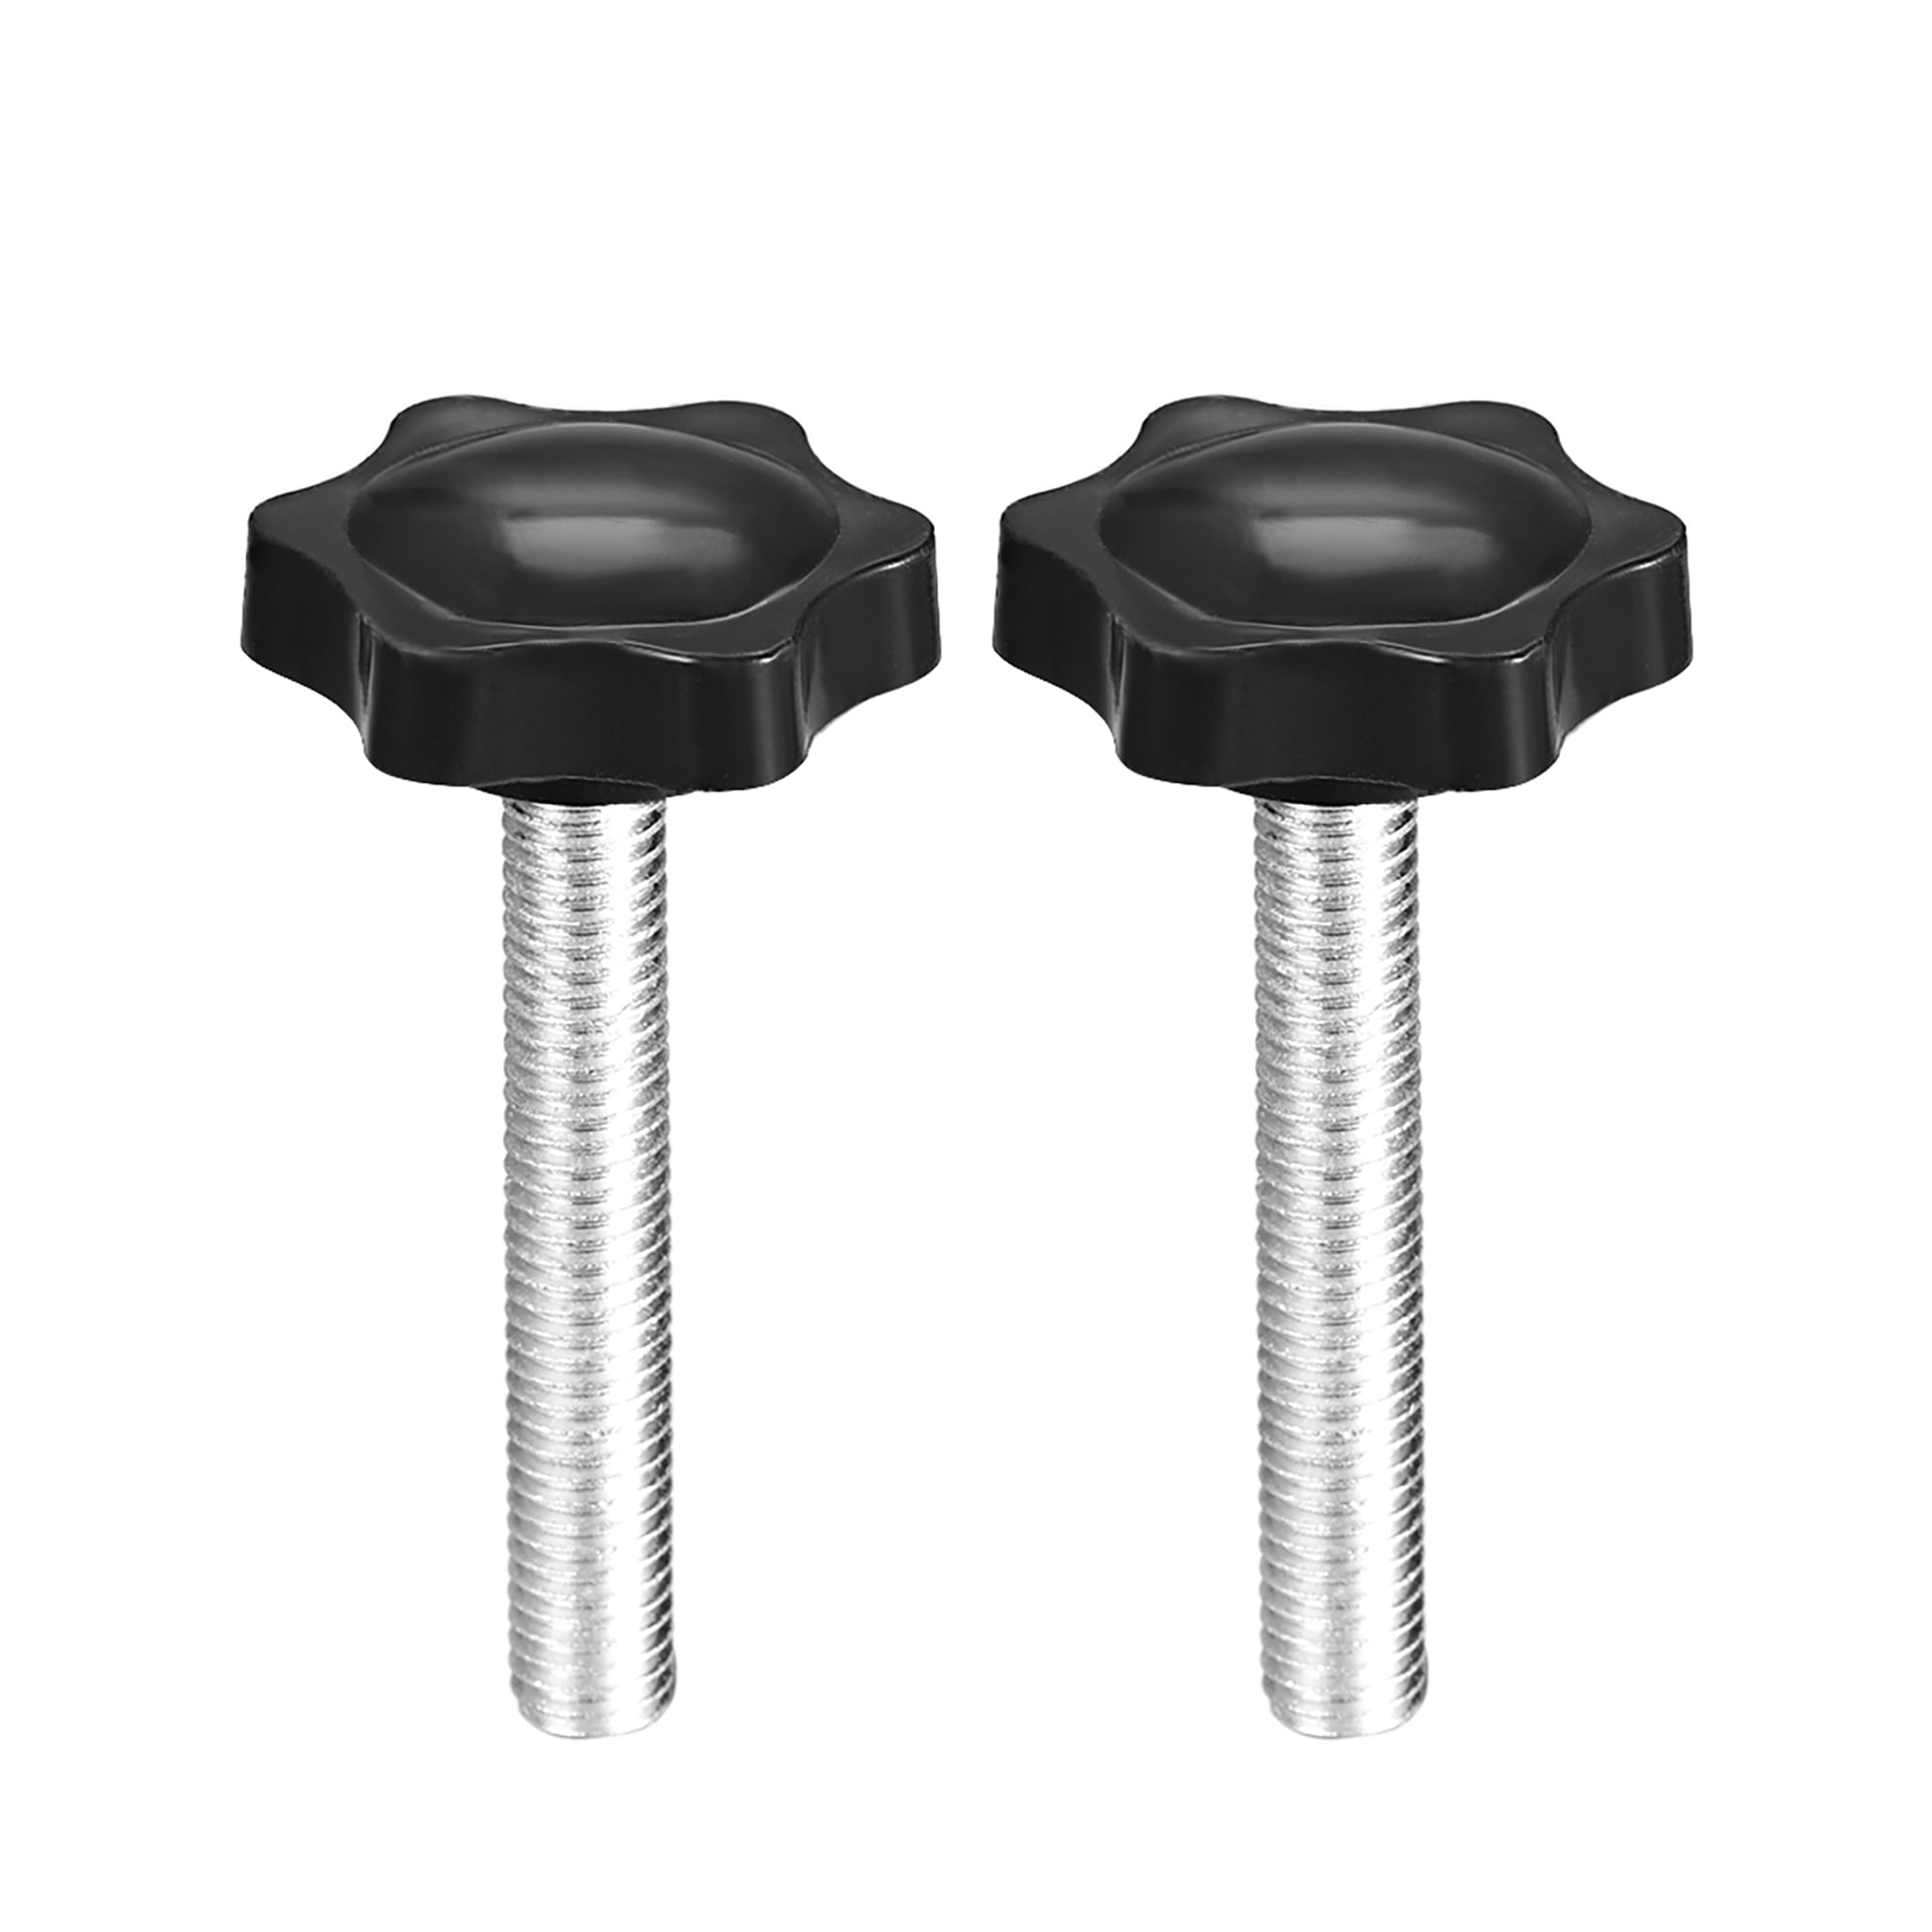 plum hexagon handles 48 mm diameter M10 × 50 mm star knob Male thread 2 pieces clamping screw knob 